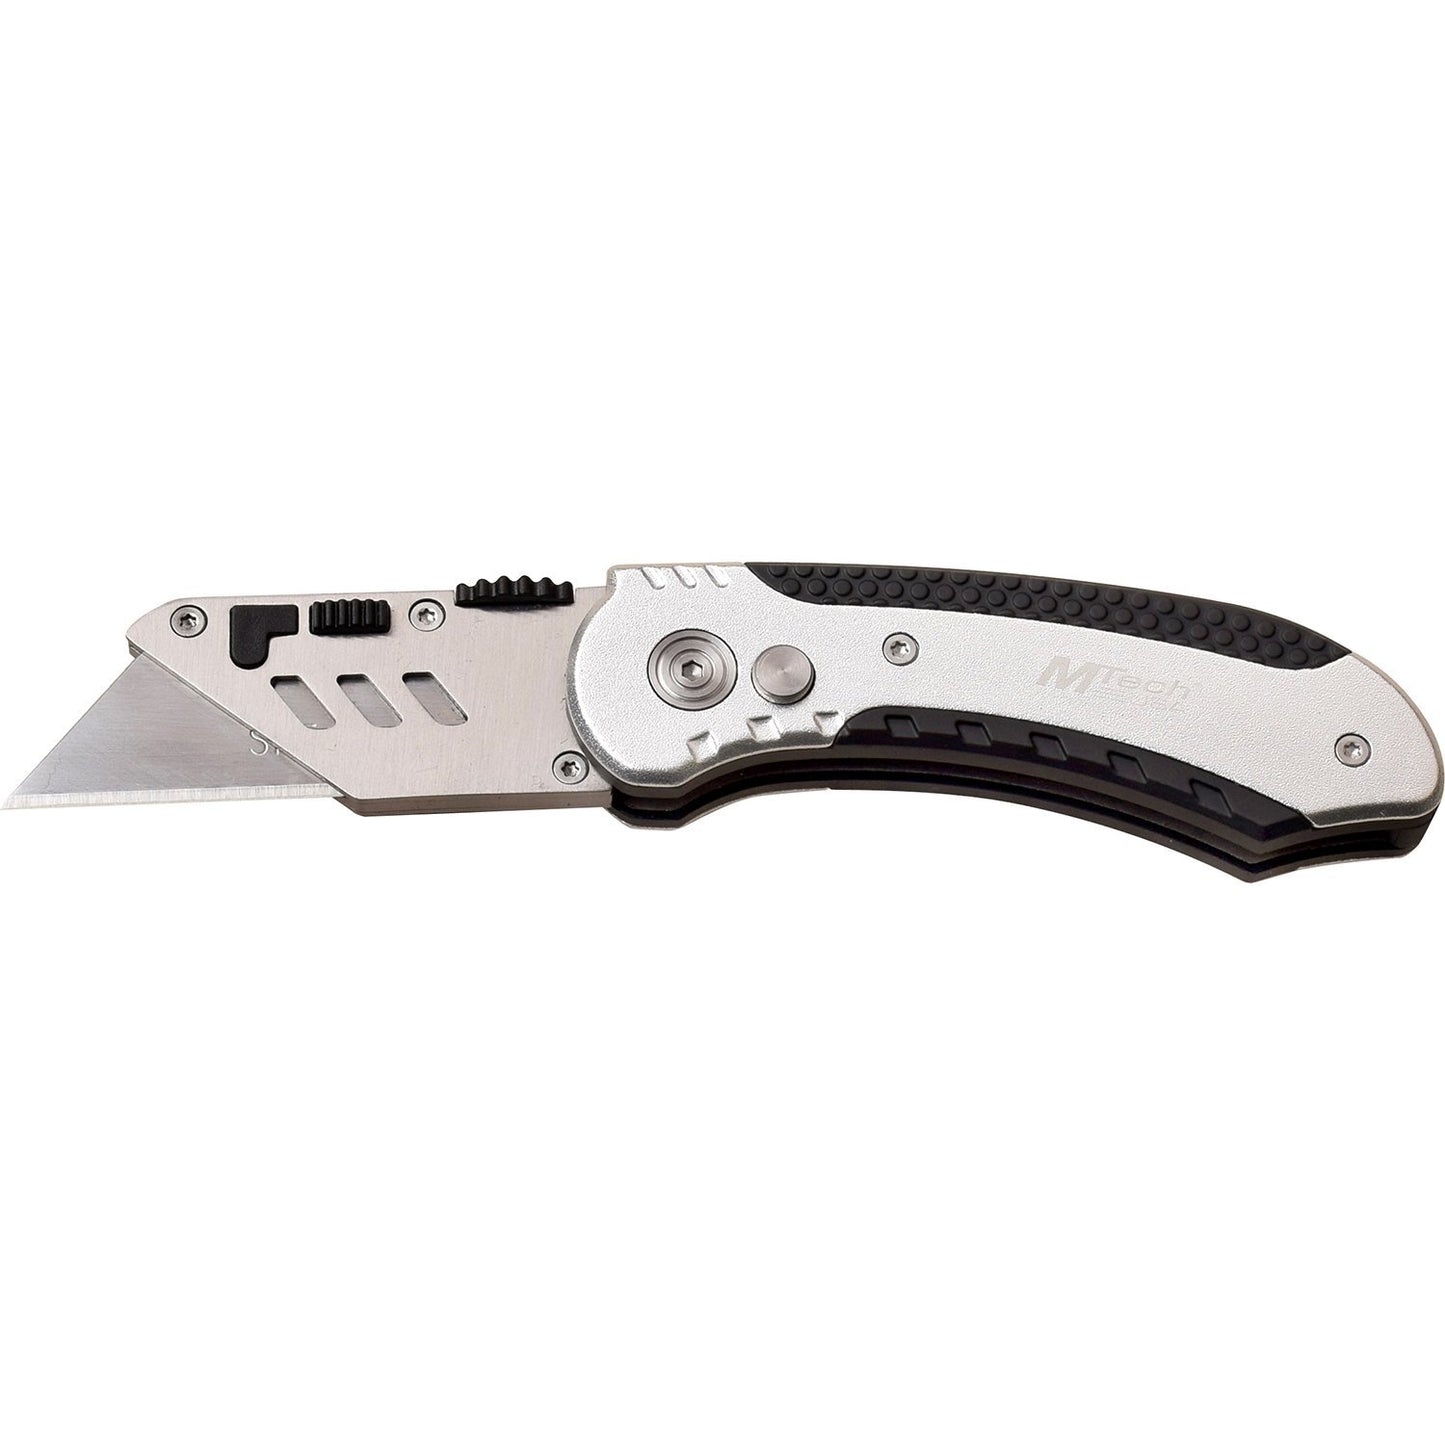 Mtech Mtech 6.25 Inch Utility Blade Button Lock Folding Knife - Silver #mt-Ut001S Lavender